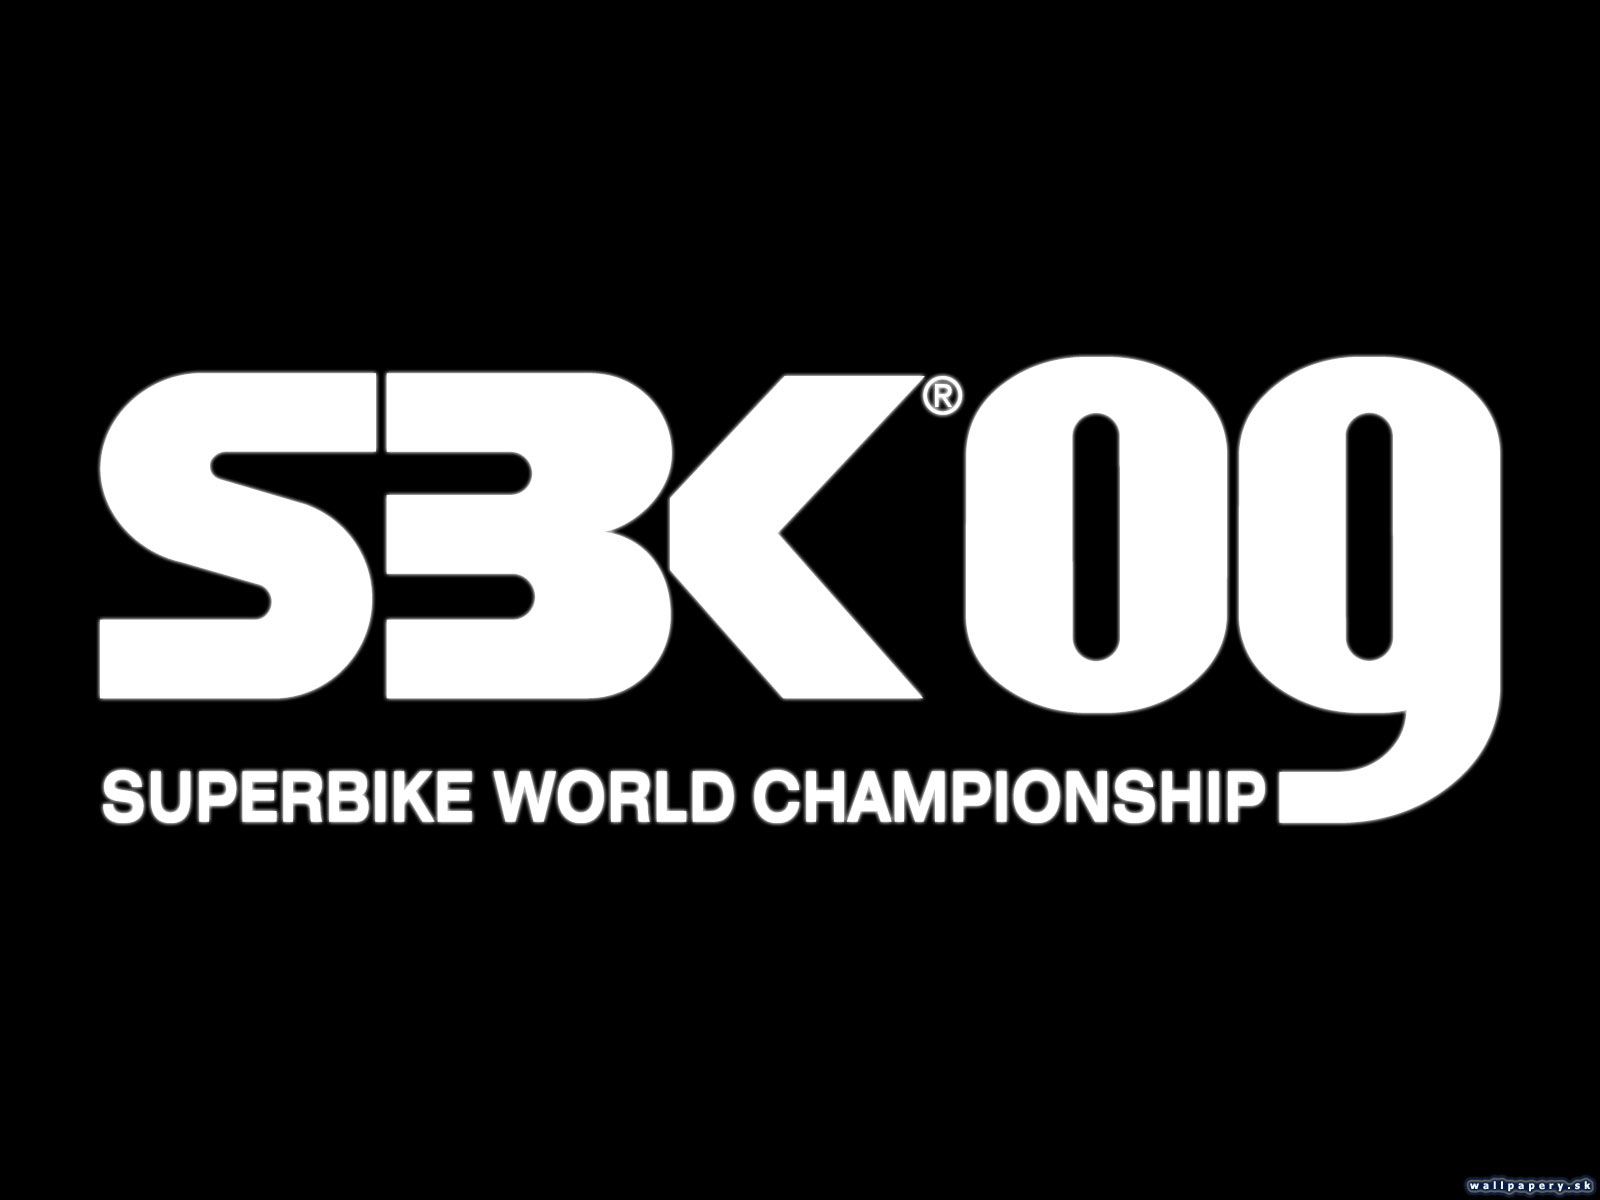 SBK-09: Superbike World Championship - wallpaper 2